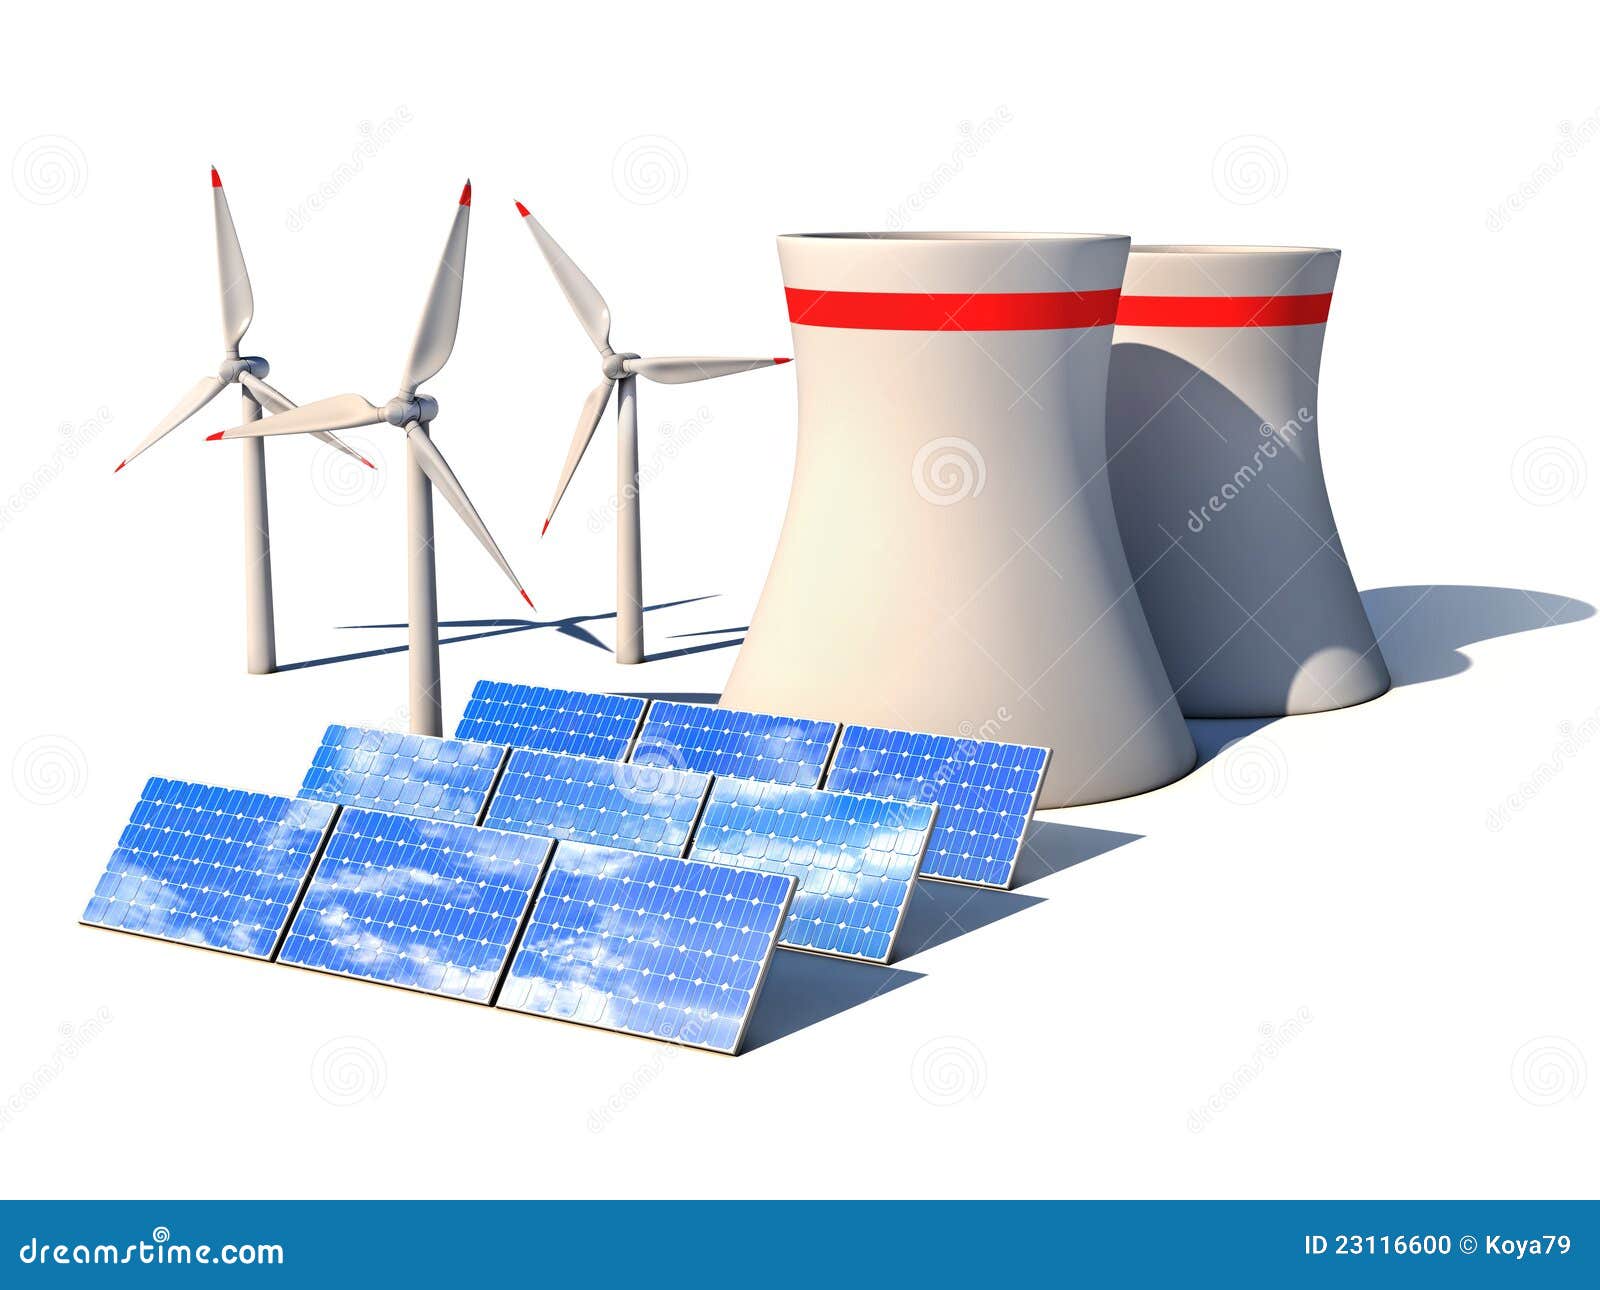 alternative energy 3d concept